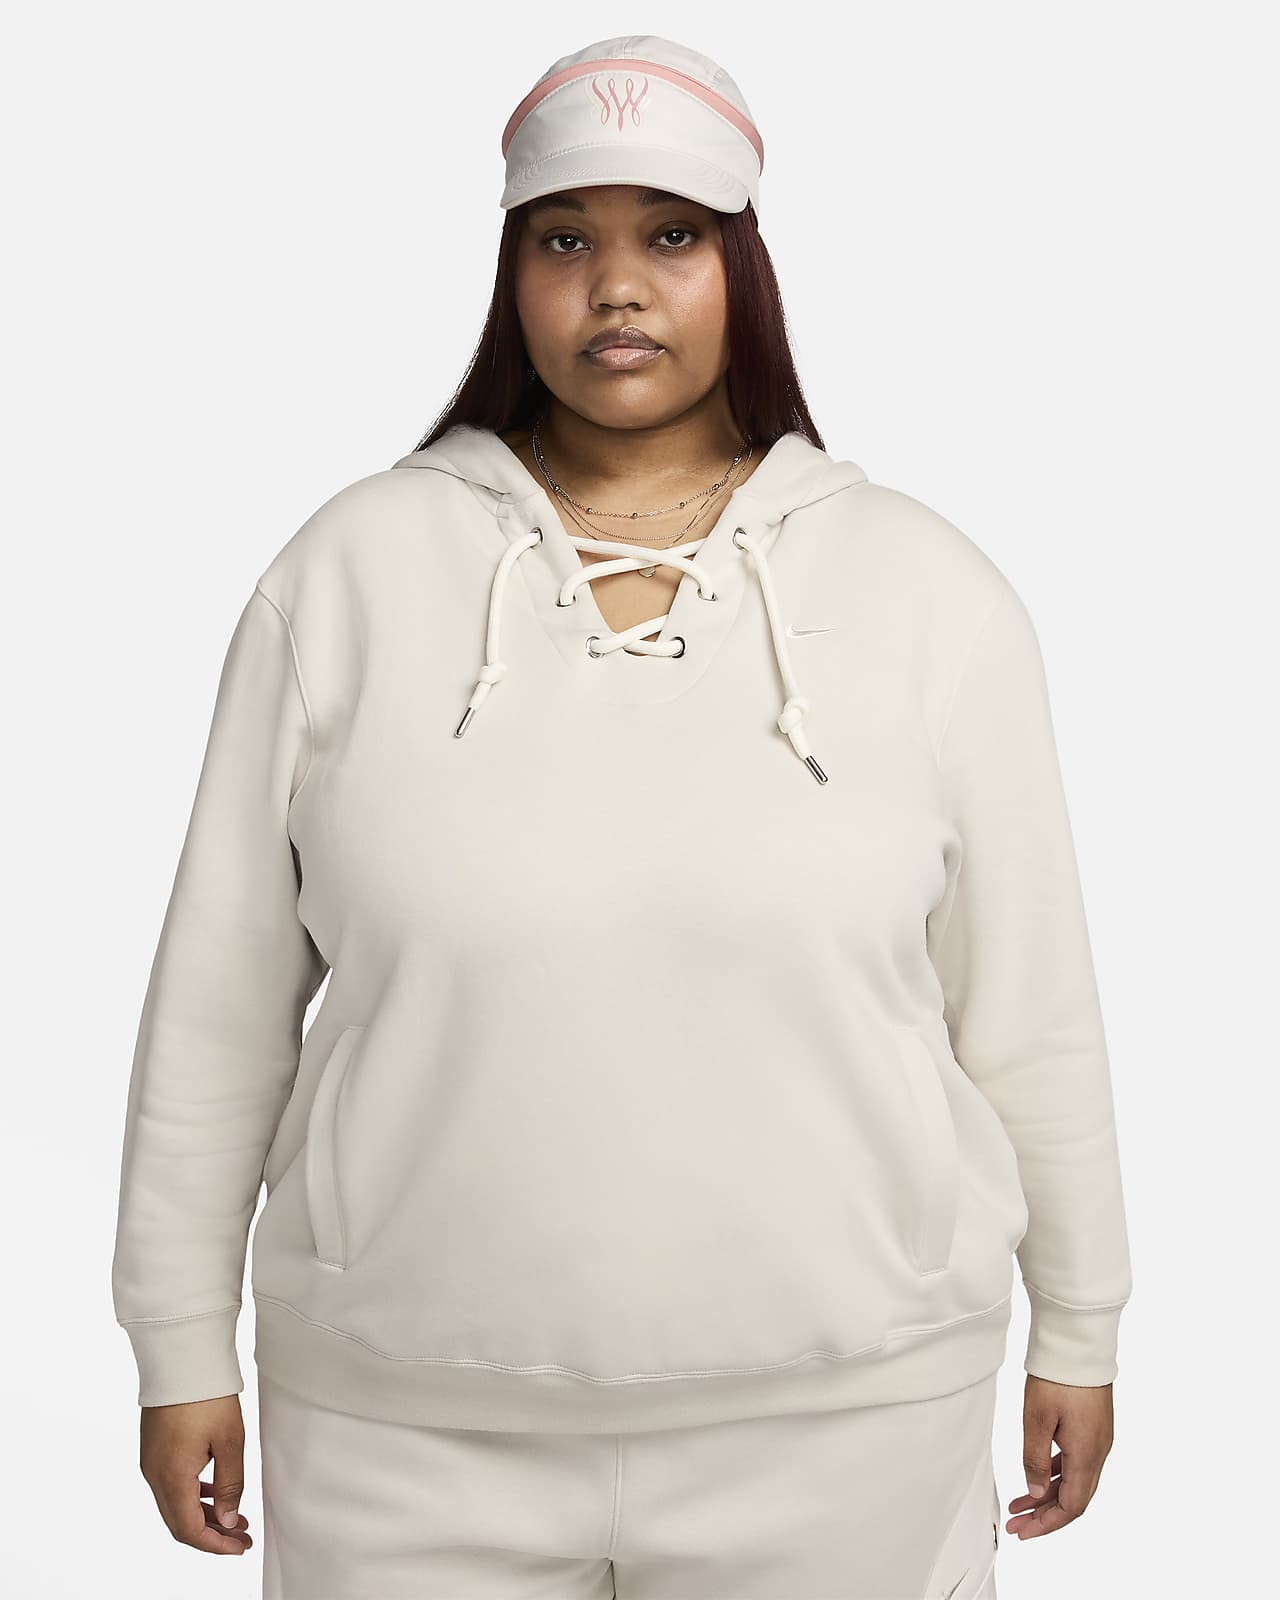 Serena Williams Design Crew Women's Fleece Pullover Hoodie (Plus Size)